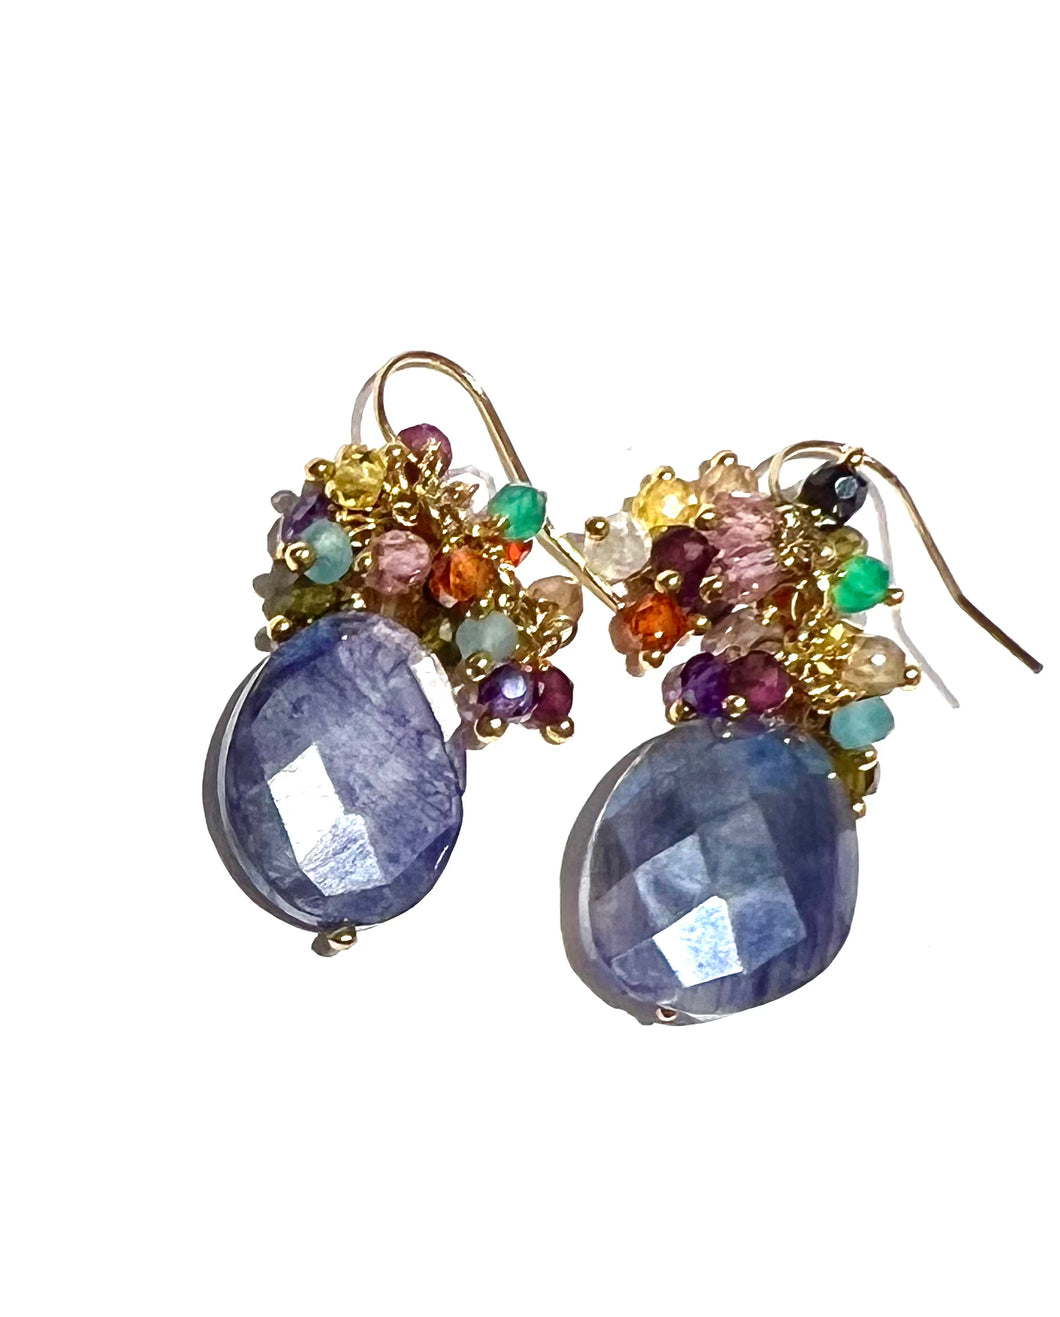 Moonstone or Labradorite Festival earrings